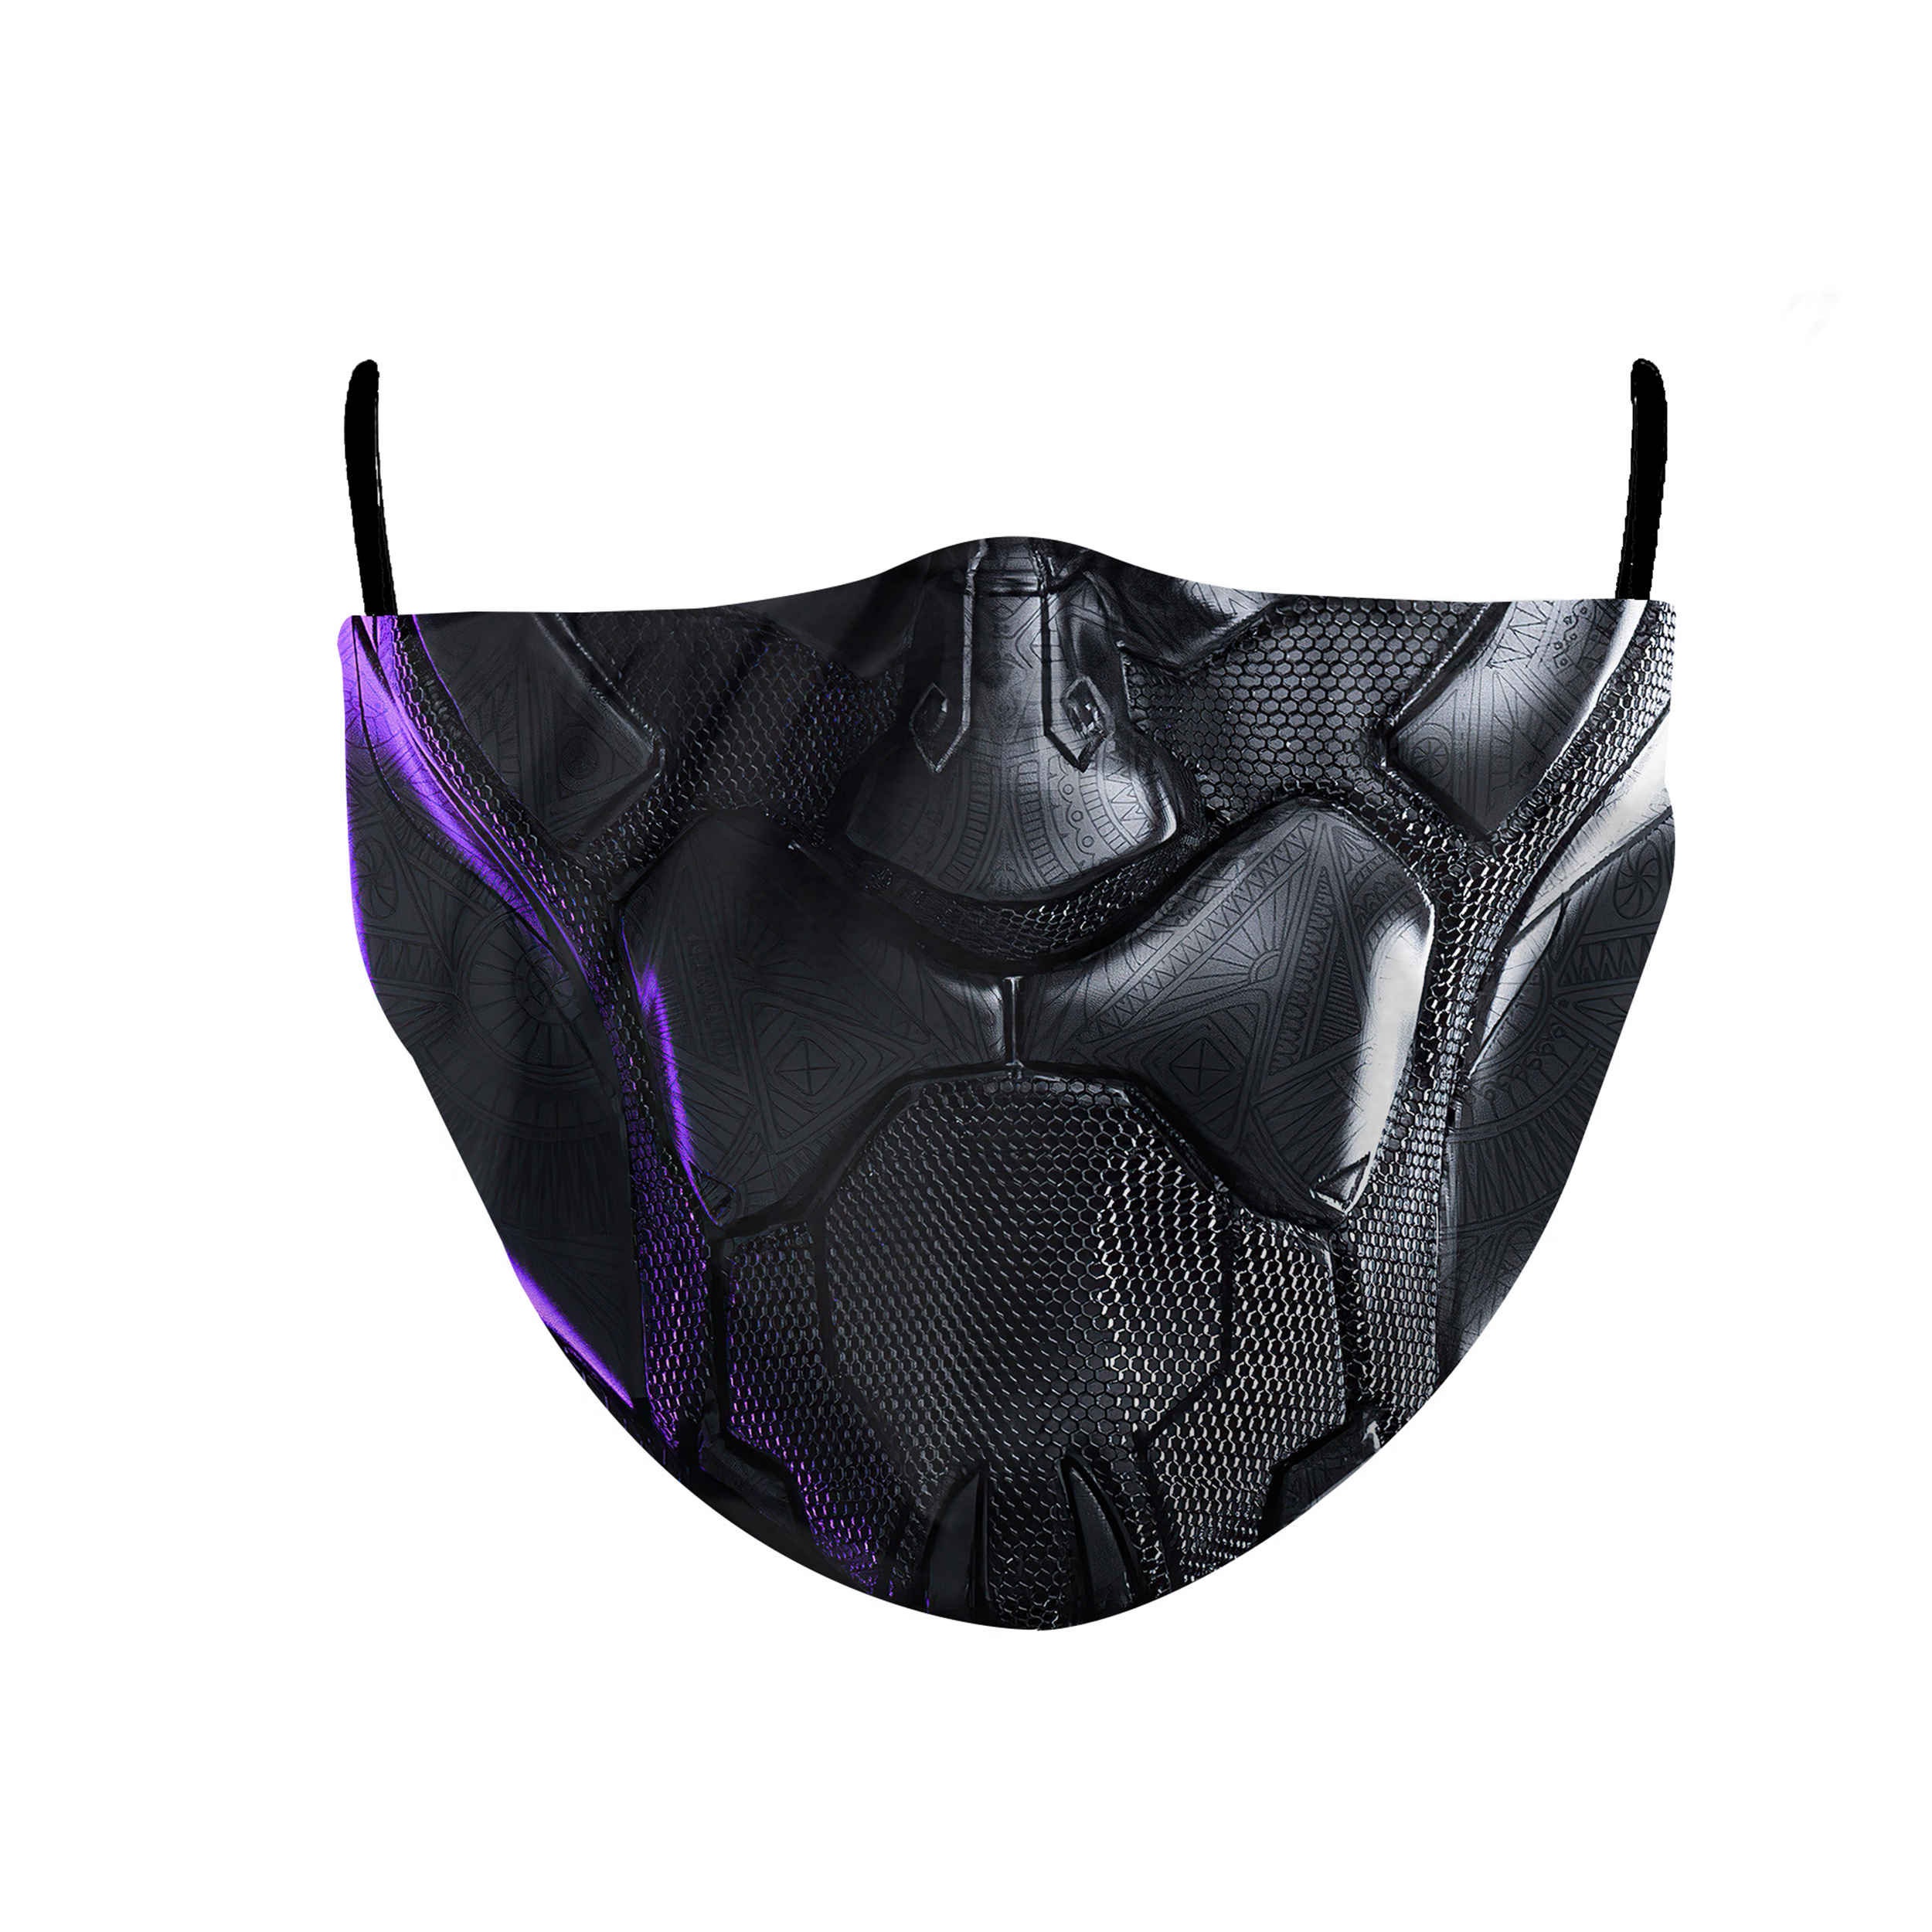 Black Panther Face Mask